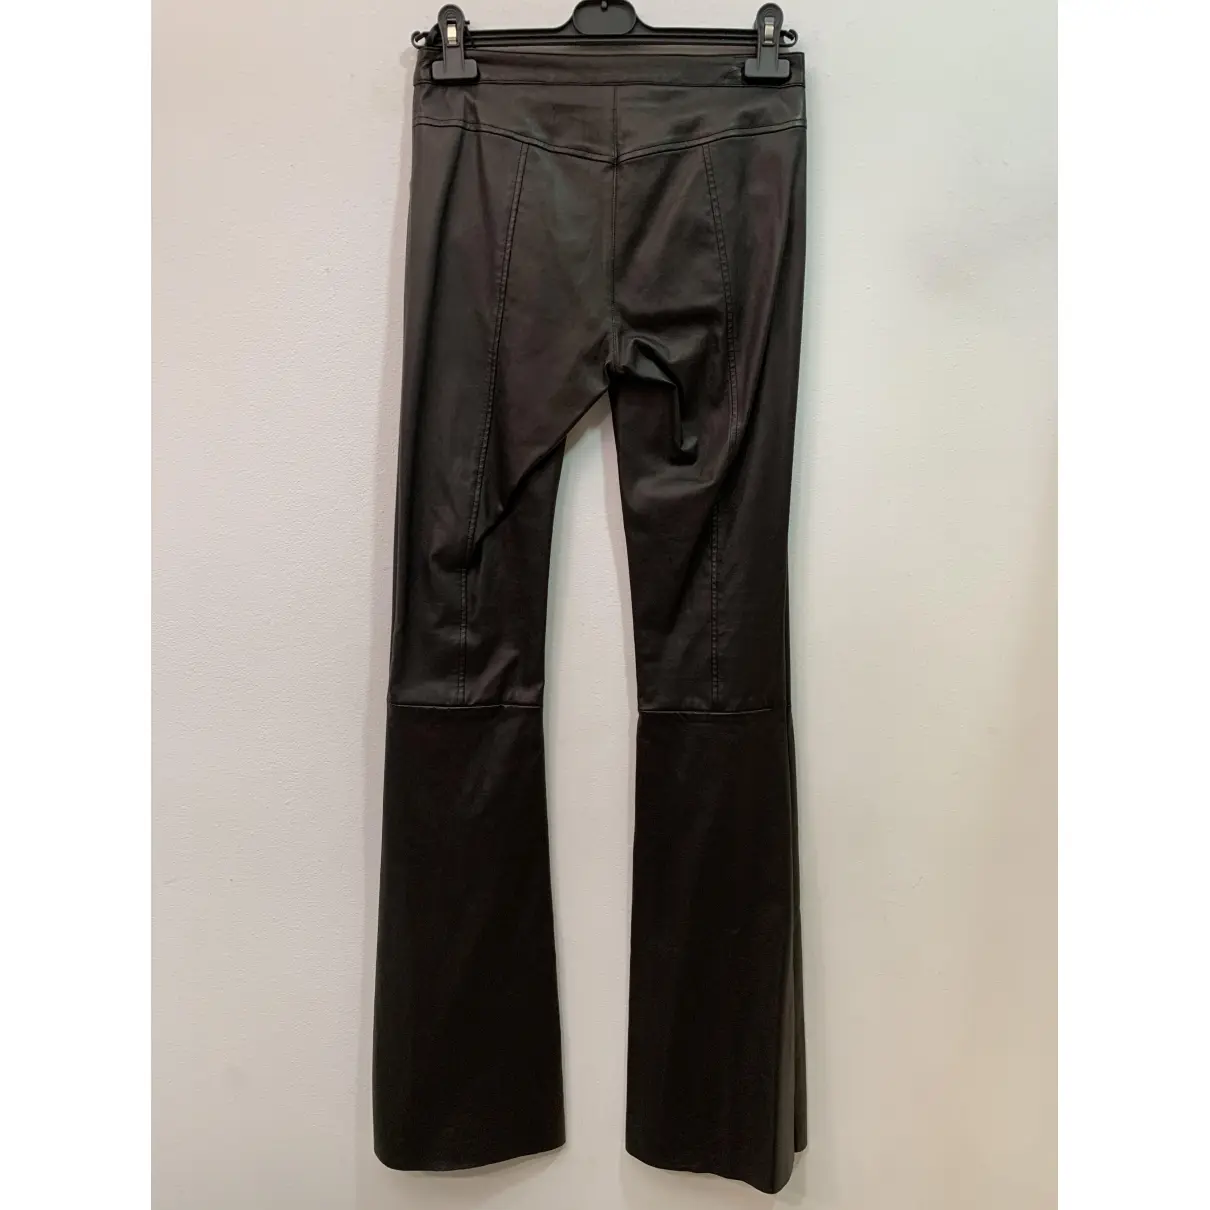 Buy Drome Leather large pants online